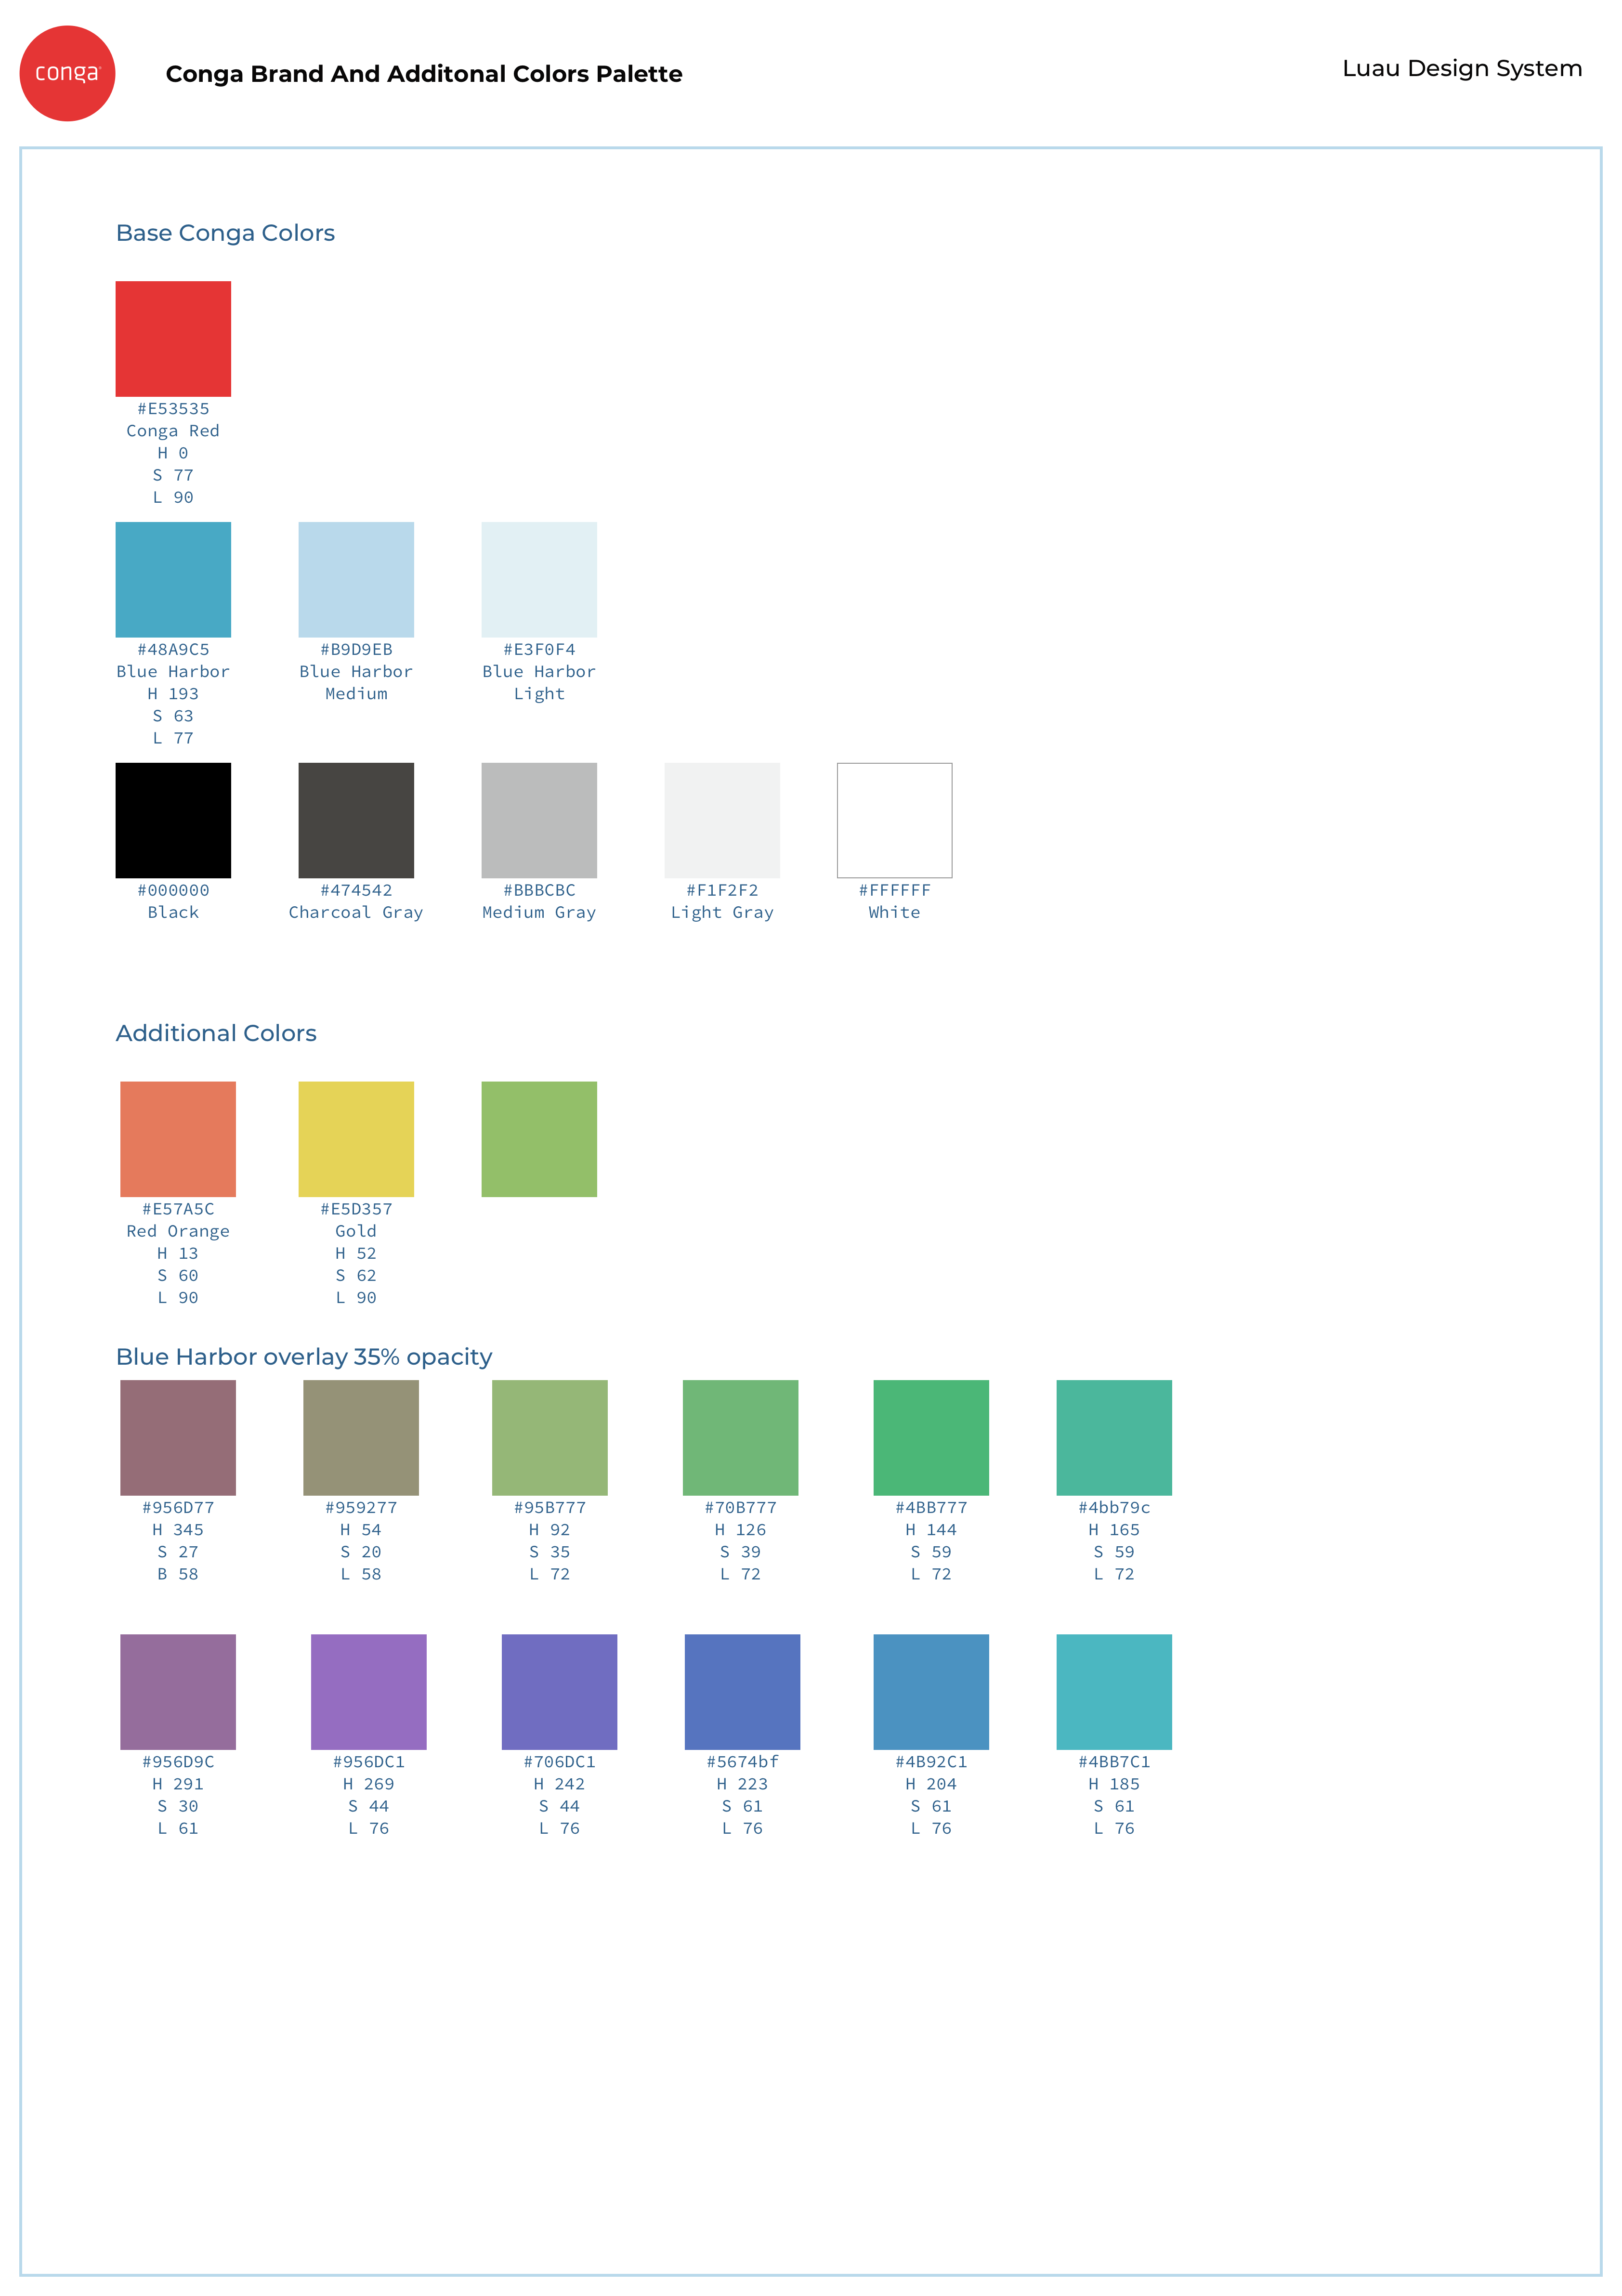 Base brand colors of the Conga Luau Design System.